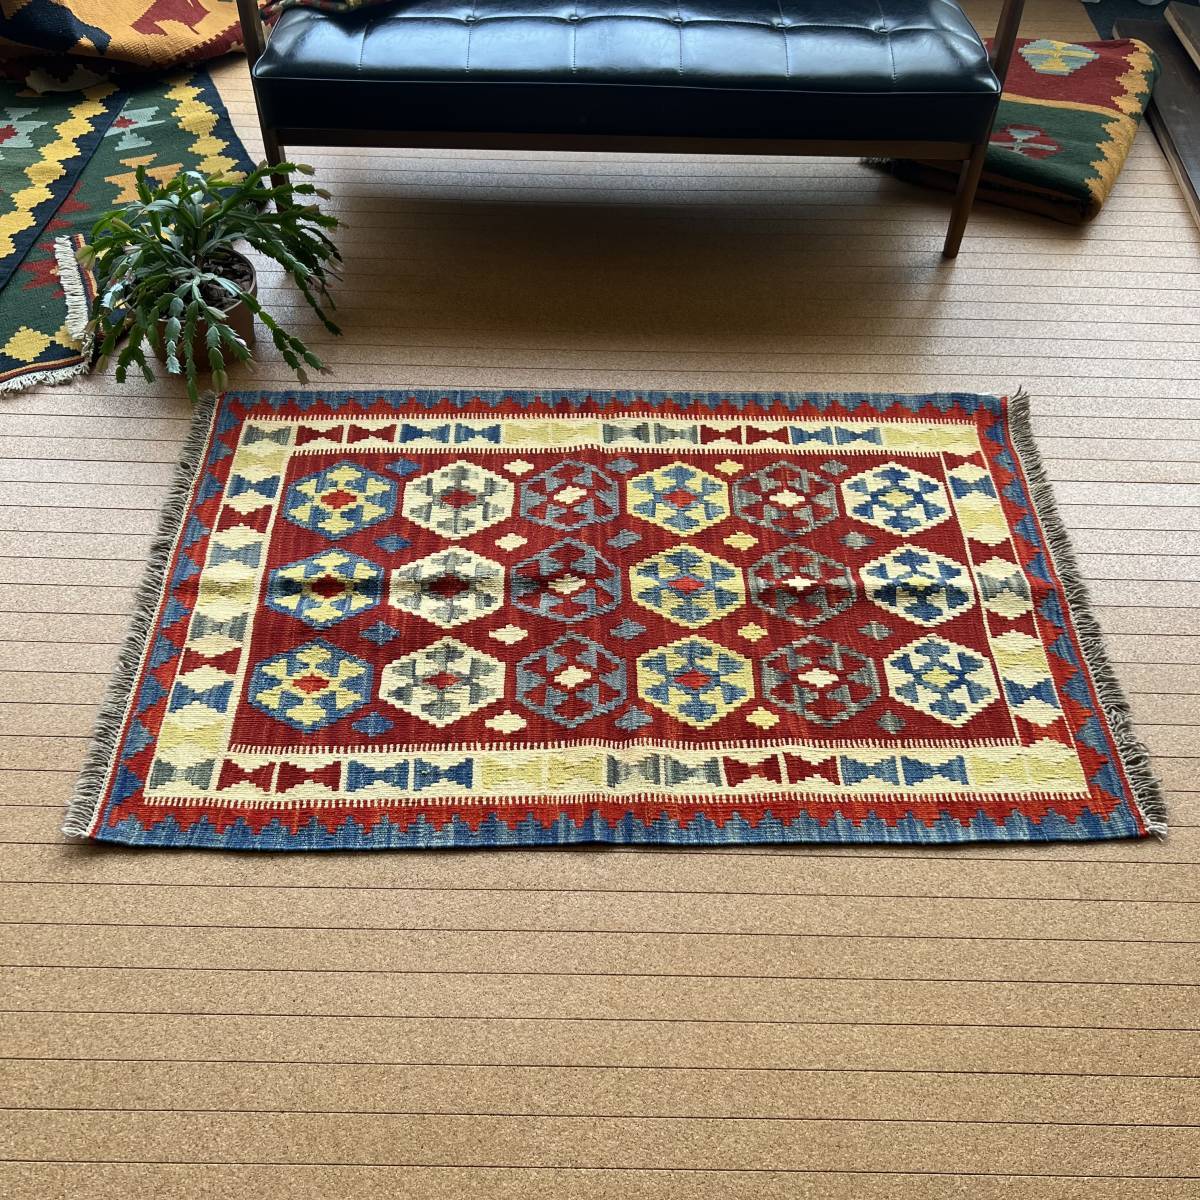 Saleアフガニスタントライバルラグ 手織り絨毯 size:110×86cm-